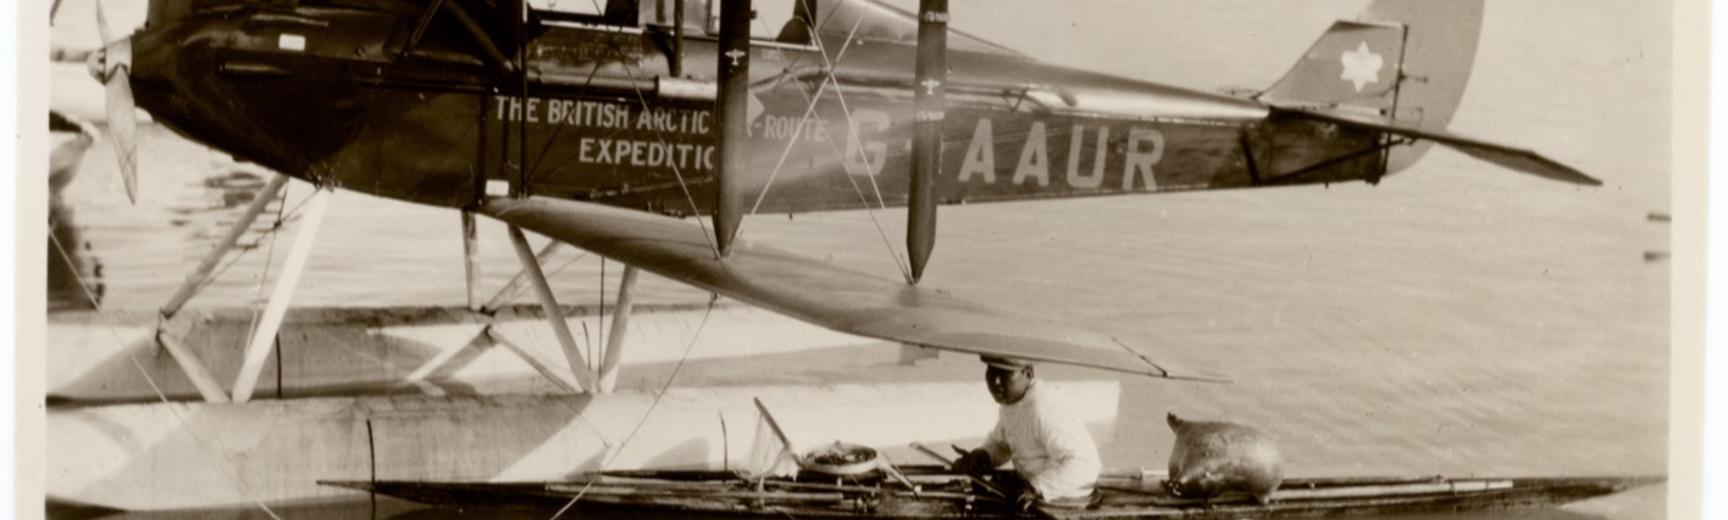 De Havilland Moth biplane, shown here with landing gear of water floats. 